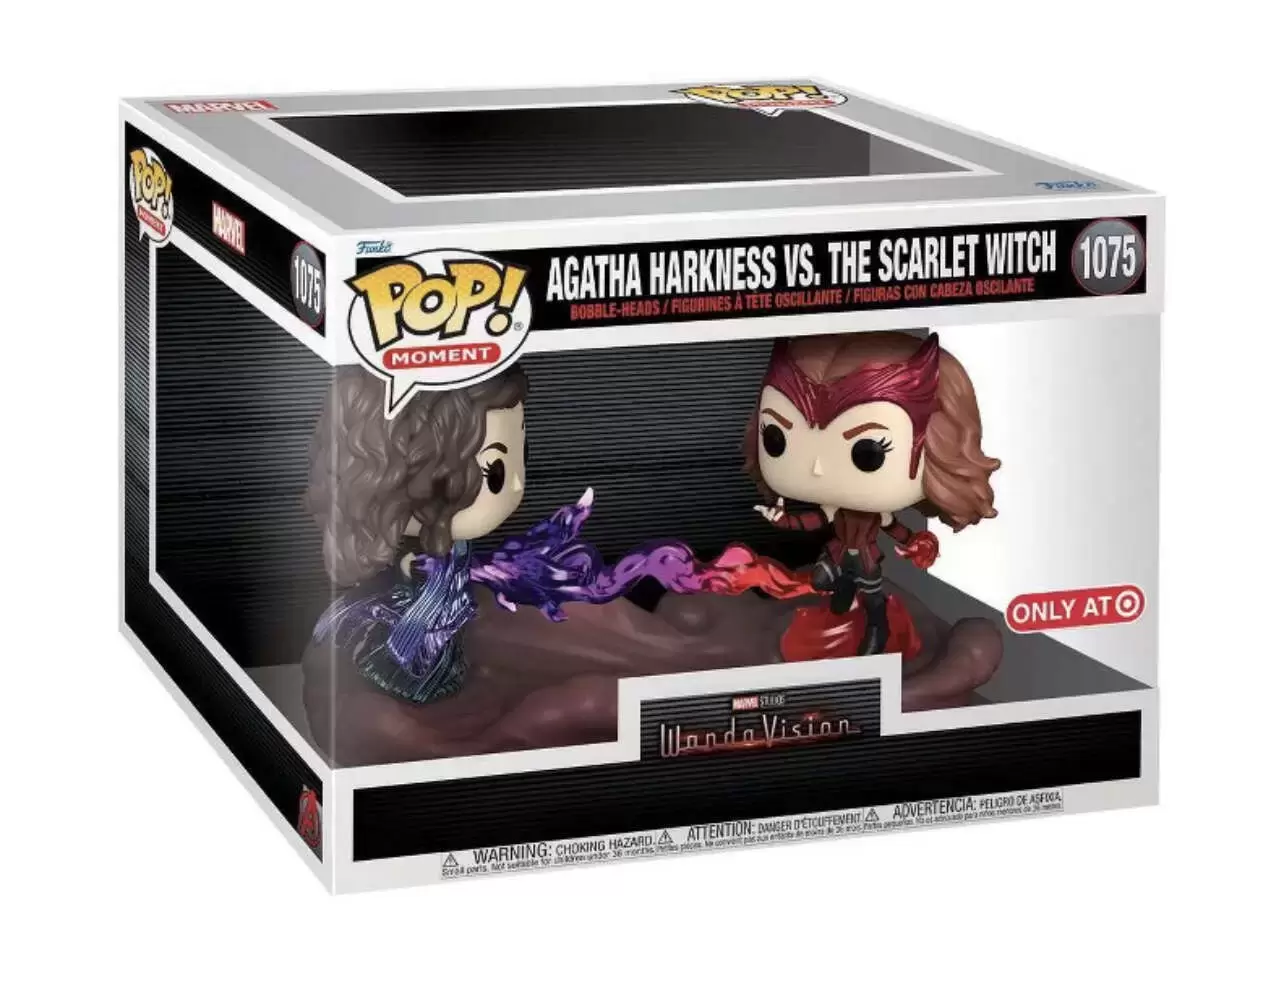 Marvel Legends Series Scarlet Witch Action Figure (target Exclusive) :  Target